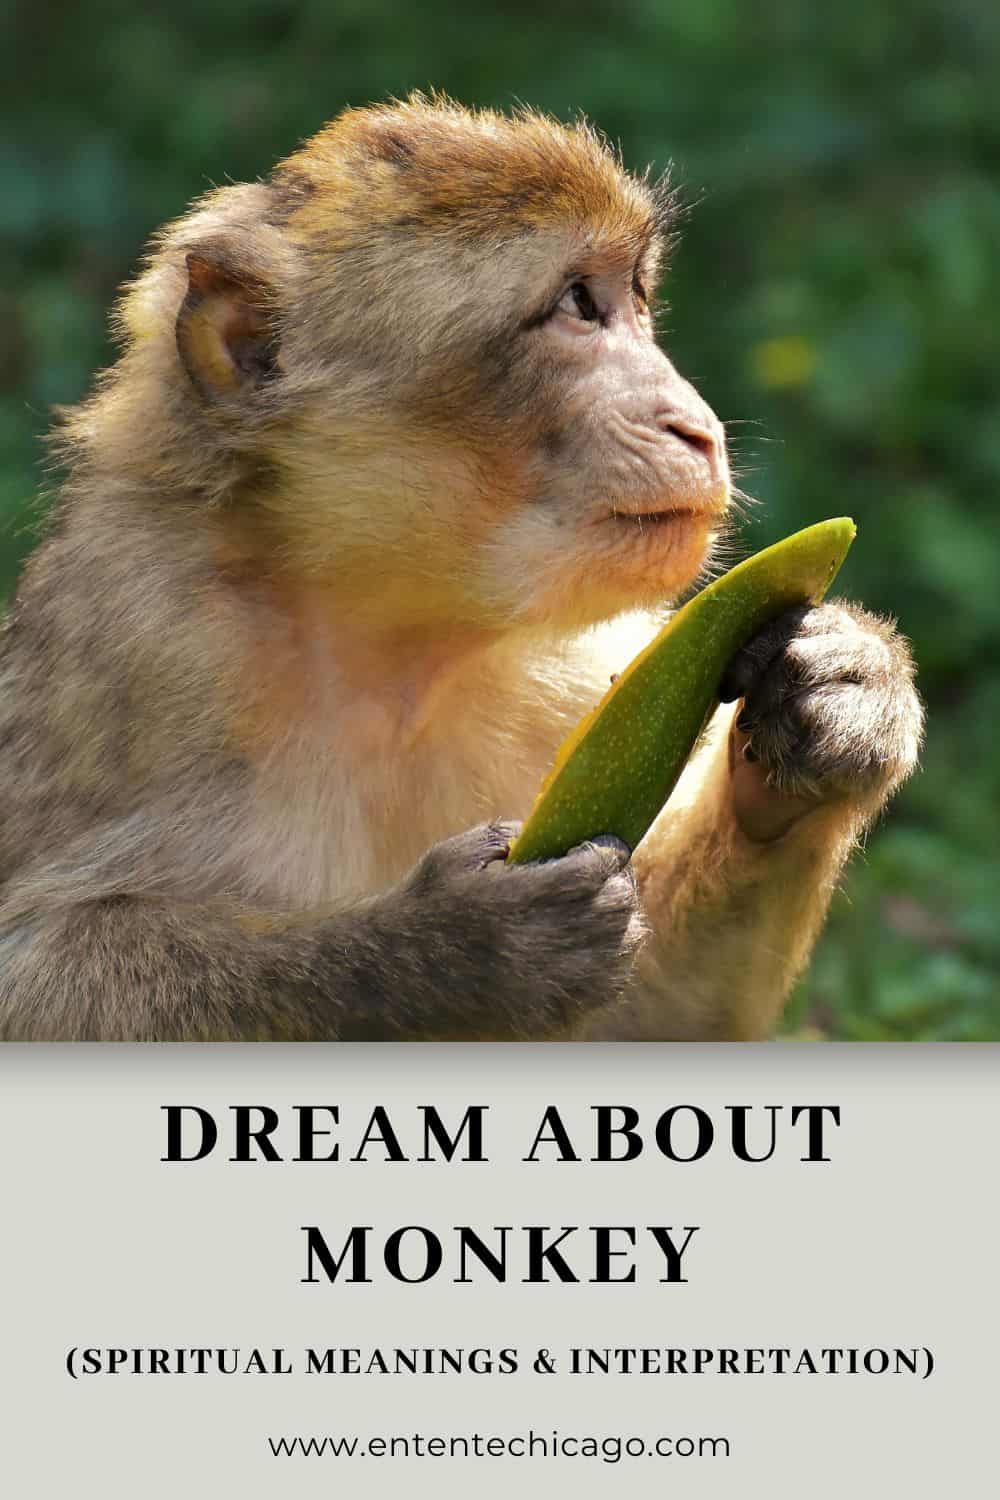 Common Dream Scenarios Involving Monkeys